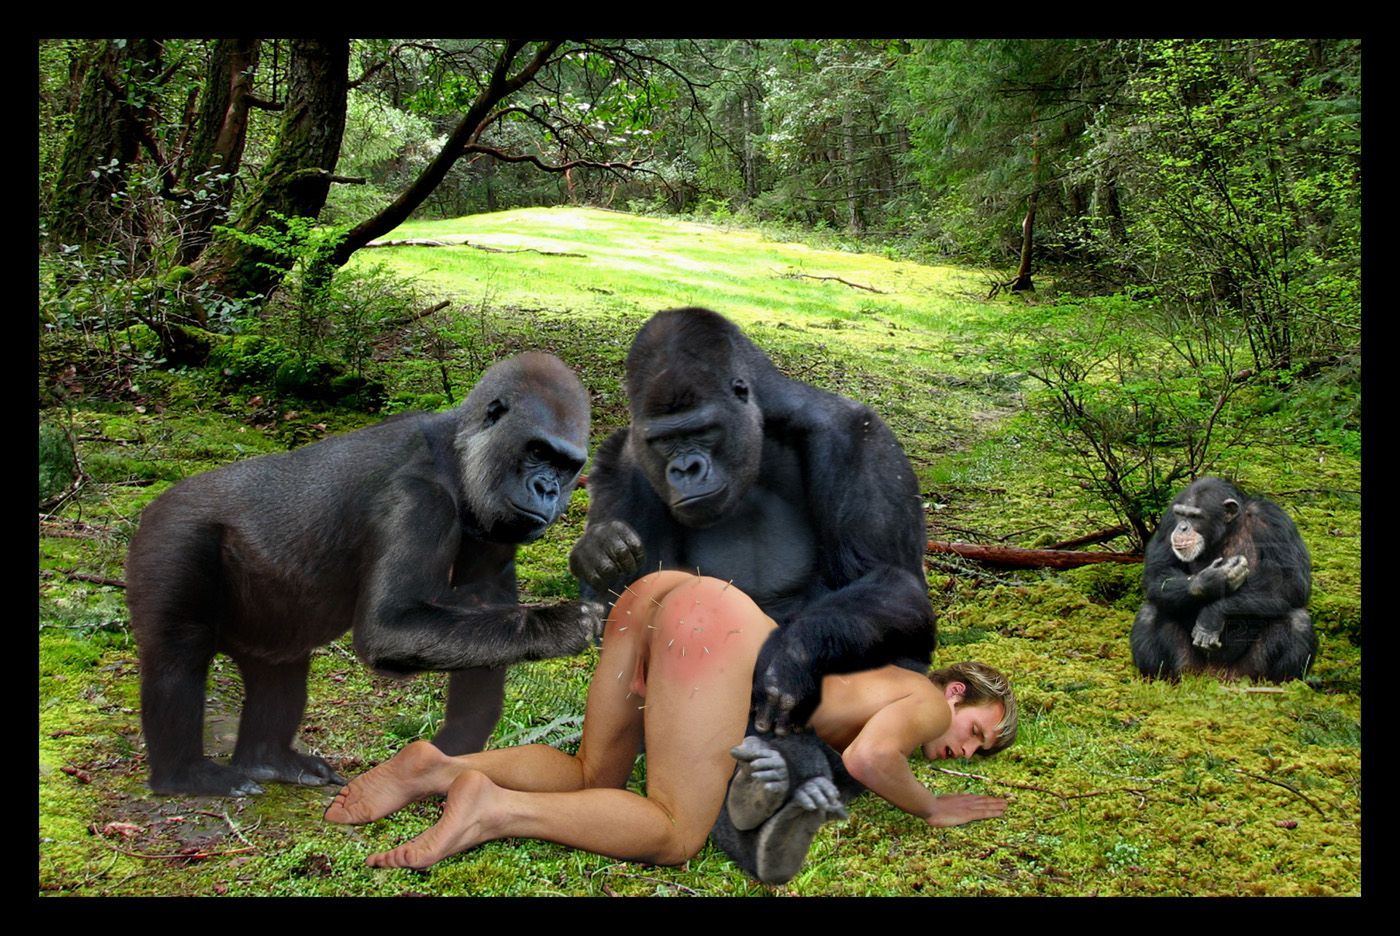 girl sucking gorilla dick porn photo